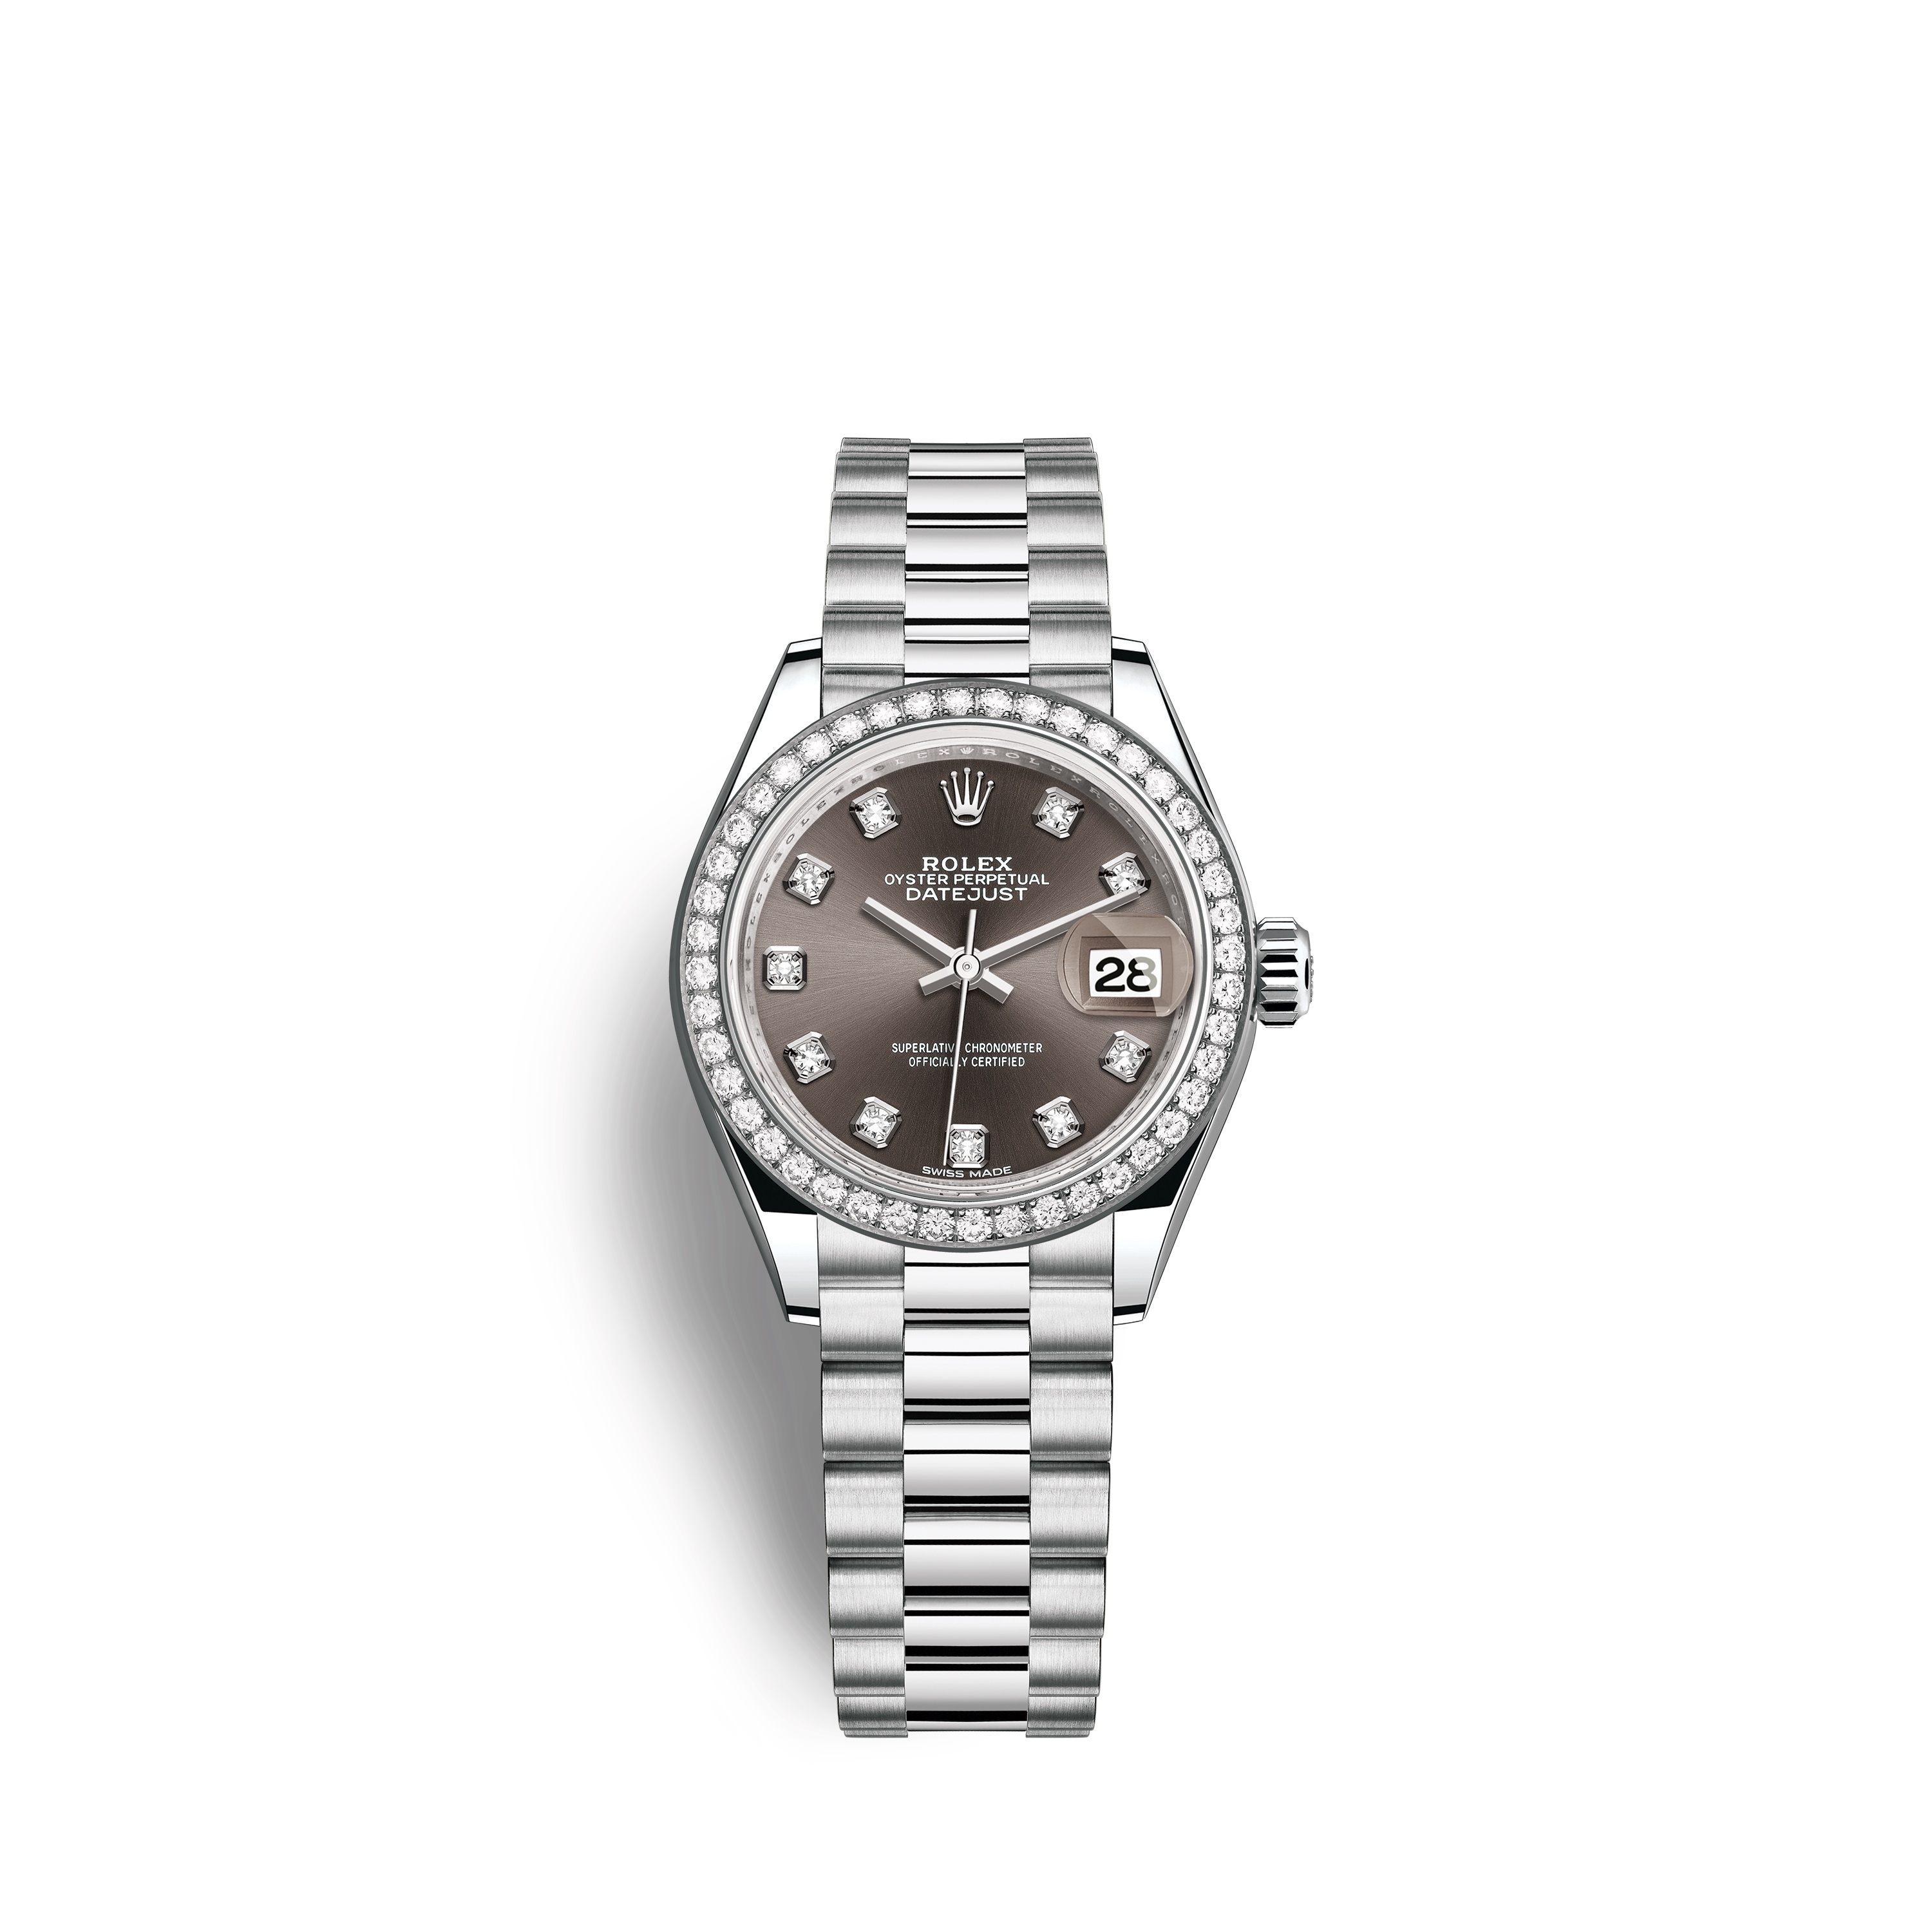 Lady-Datejust 28 279136RBR Platinum & Diamonds Watch (Dark Grey Set with Diamonds)